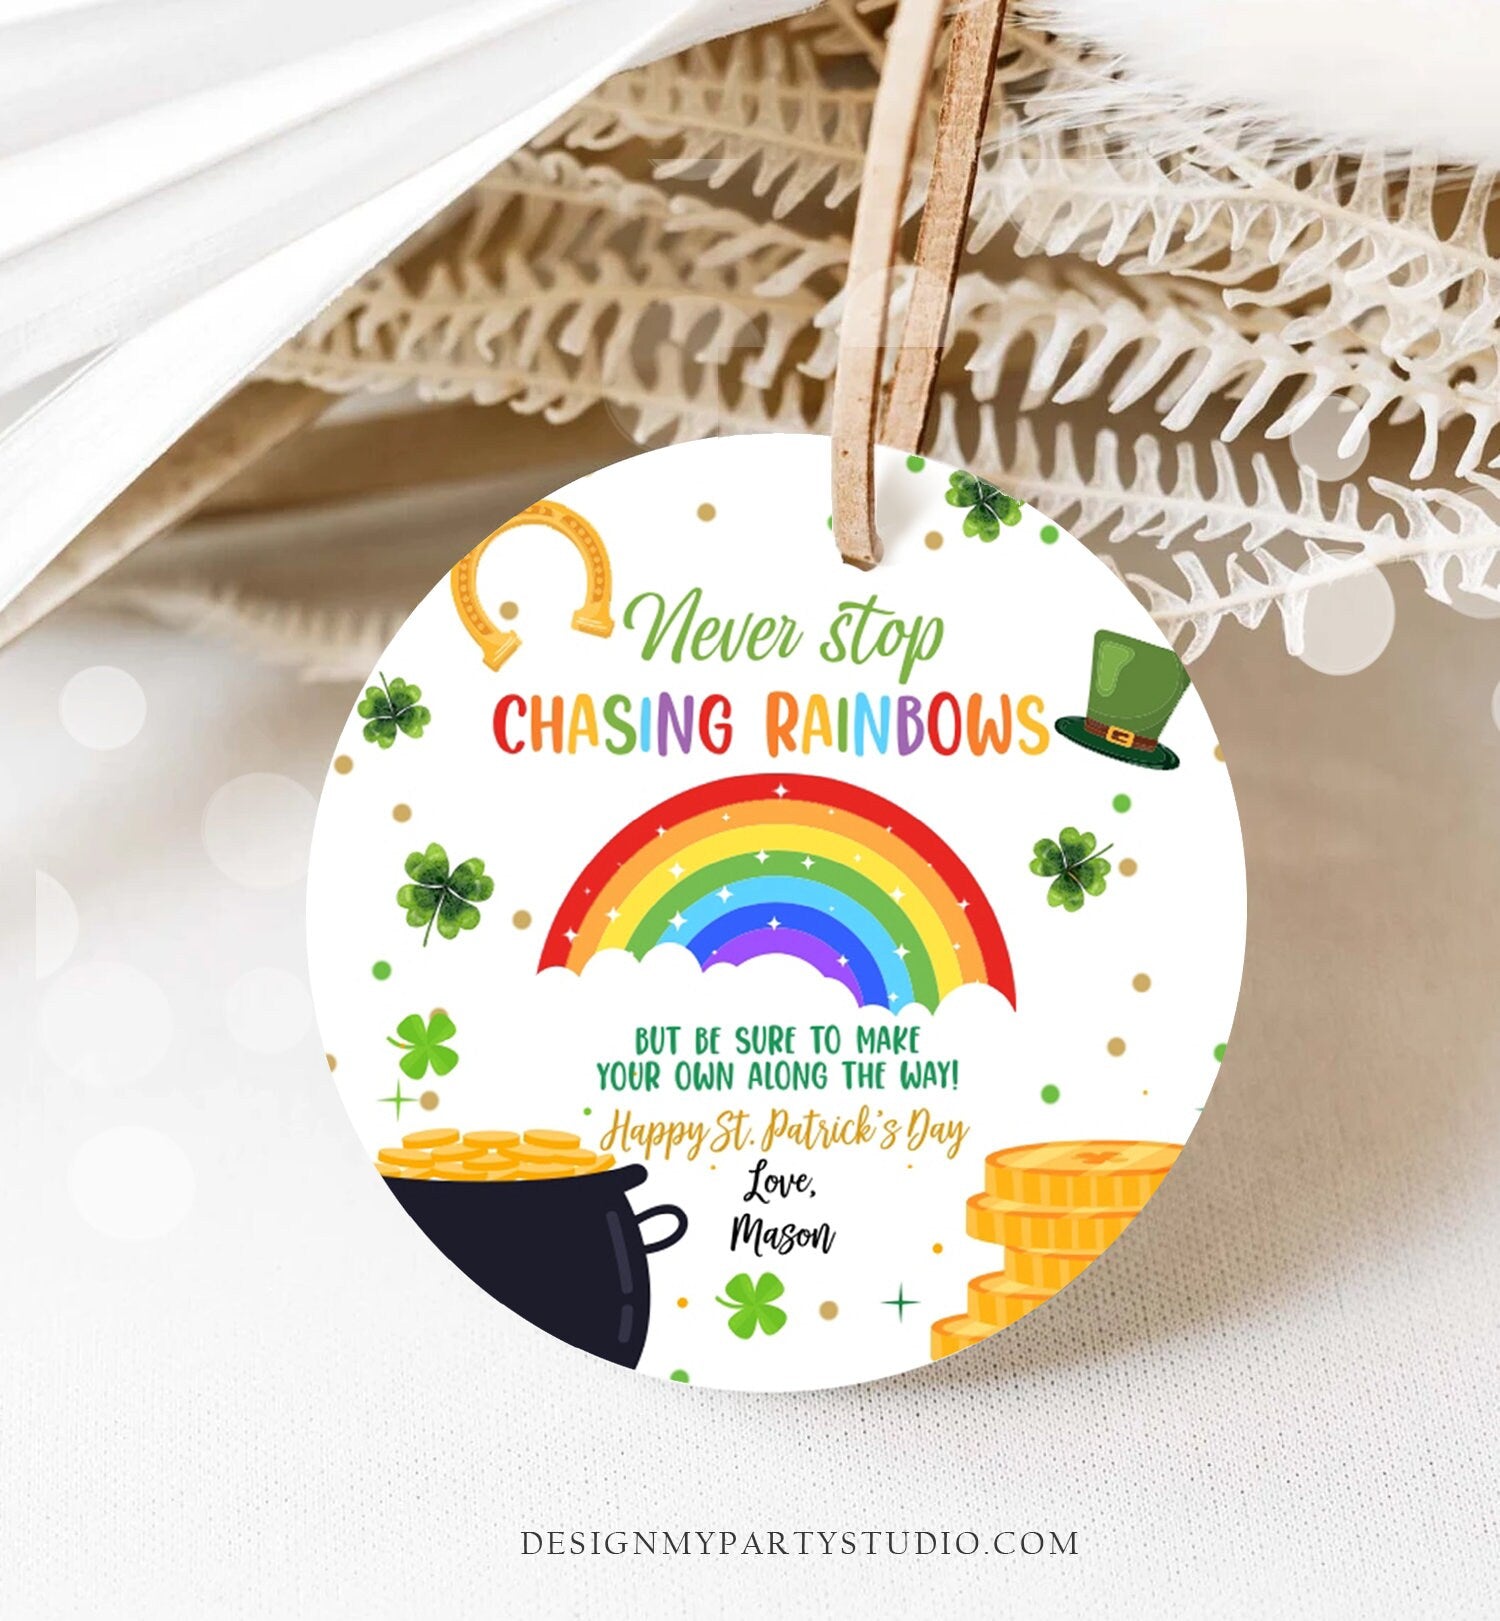 Editable Chasing Rainbows Tag St Patrick's Day Favor Tags Glassroom Gift Kids Crayons Pot of Gold Shamrock Leprechaun Template Corjl 0451